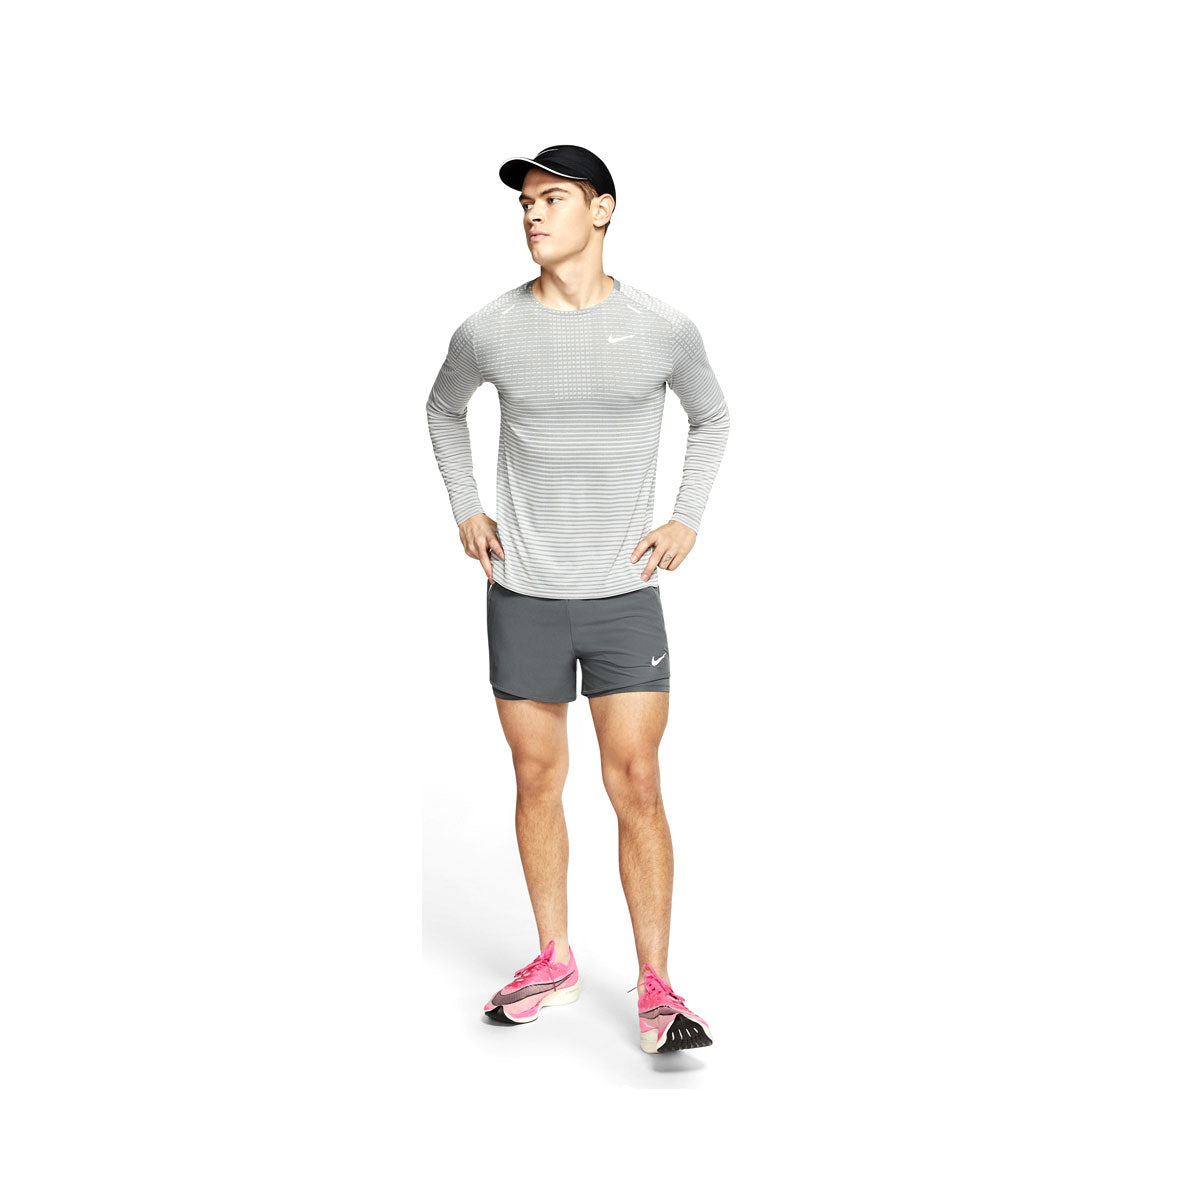 Nike Men's TechKnit Ultra Long-Sleeve Running Top Grey